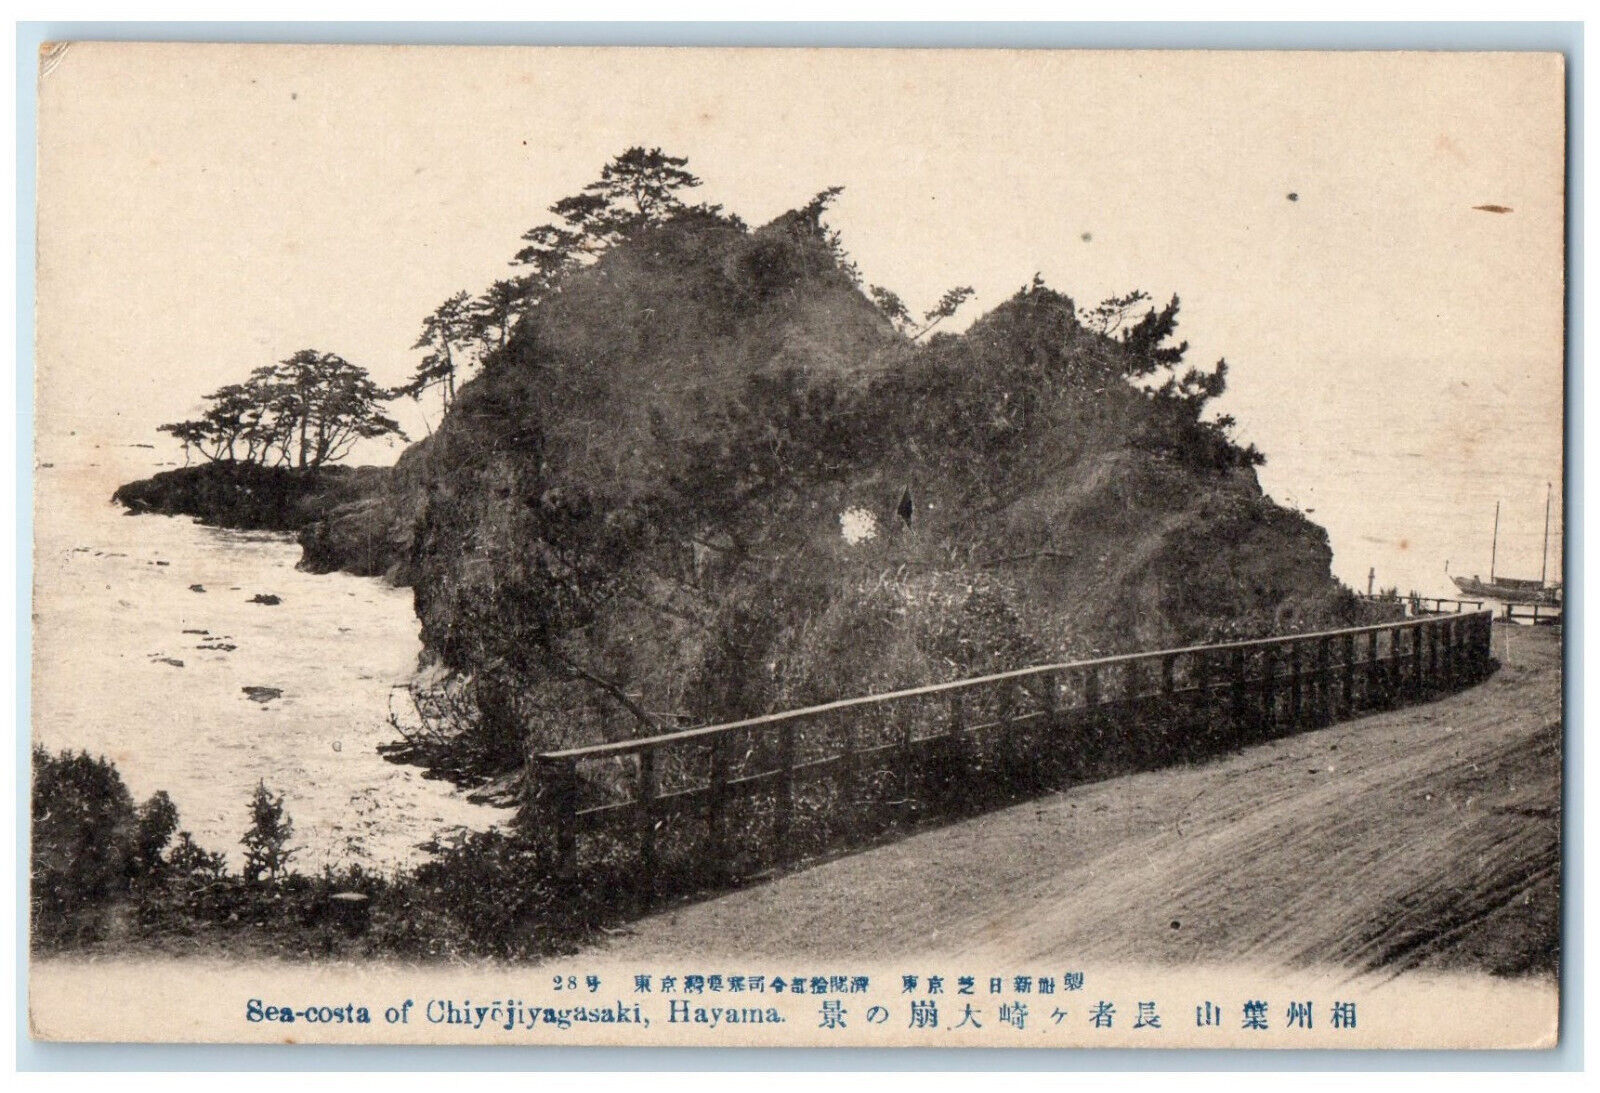 c1910 Sea-costa of Chiyojiyagasaki Hayama Honshu Japan Antique Postcard